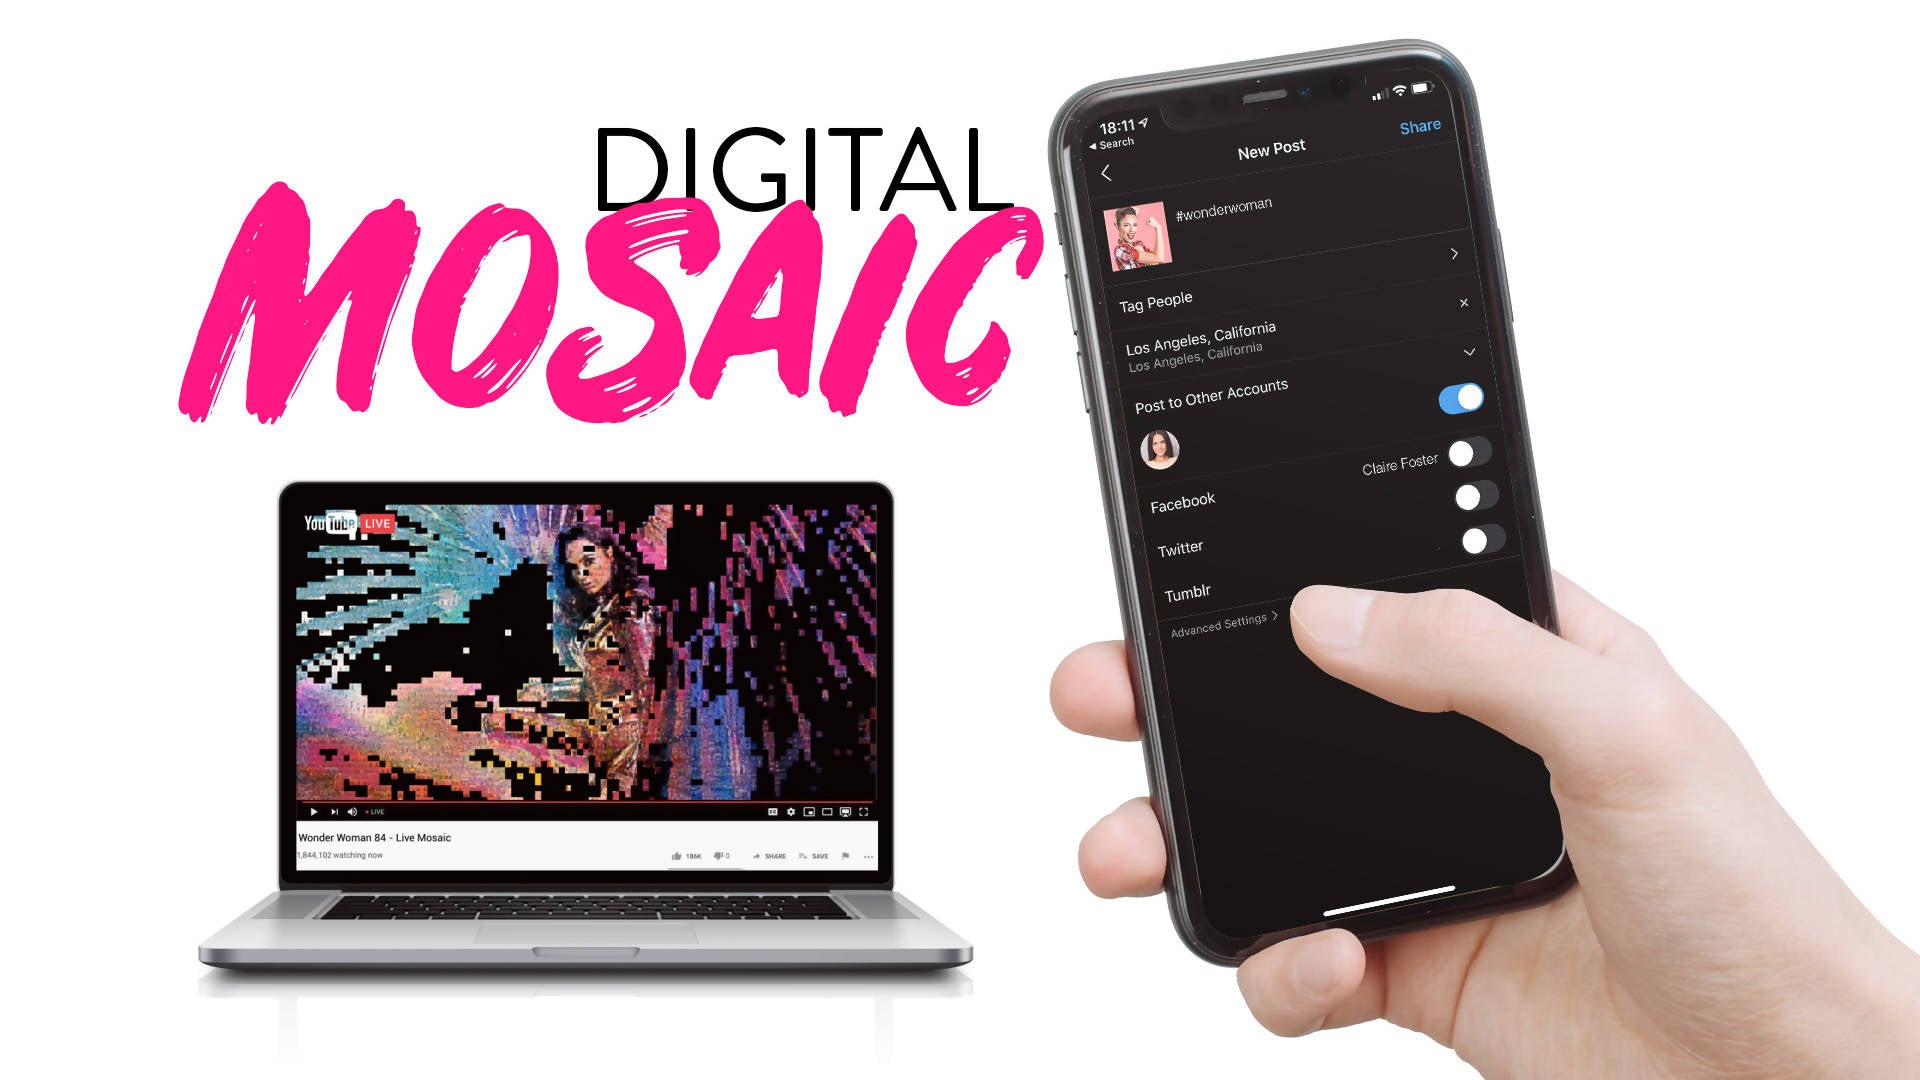 The Digital Mosaic